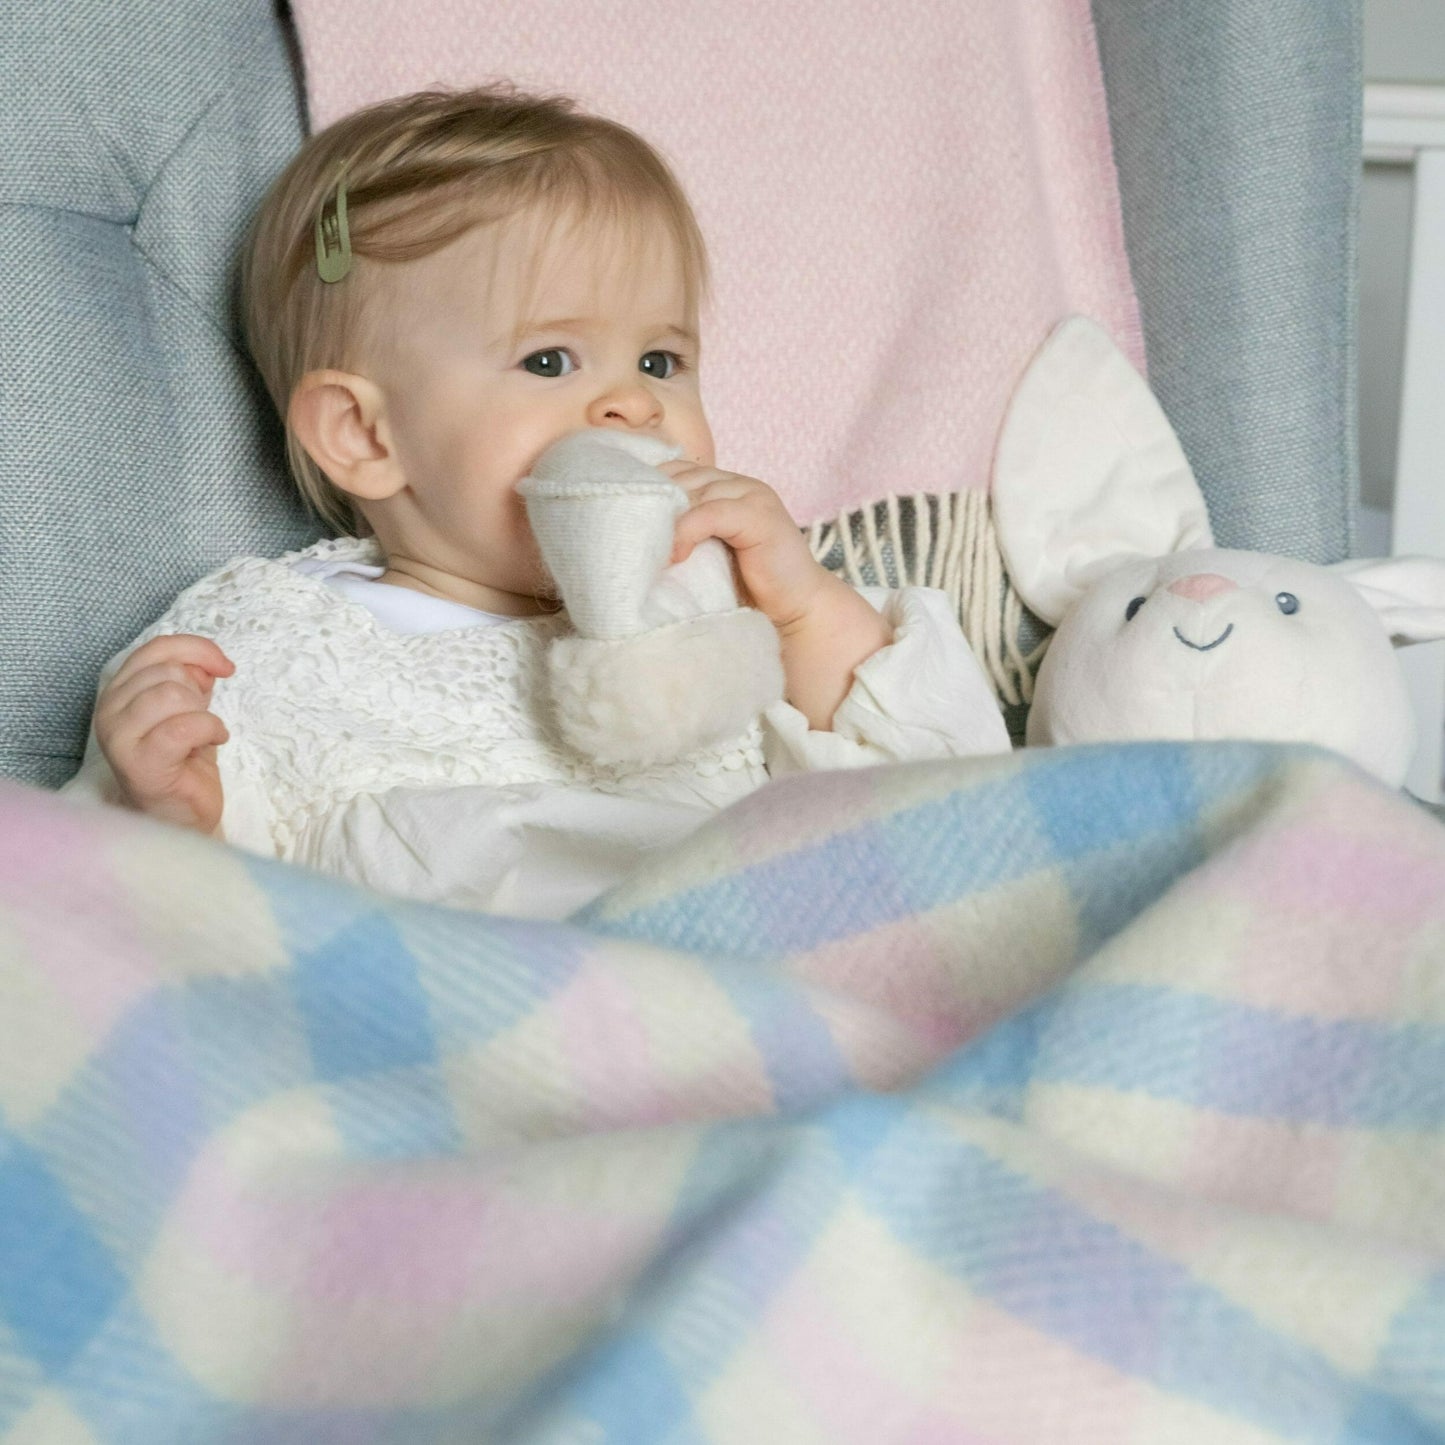 John Hanly Irish Wool Baby Blanket | White, Pink & Blue Border Block Check | 100% Pure Irish Wool Blanket | Lifestyle: Baby on Sofa with Blanket | BeoVERDE Ireland